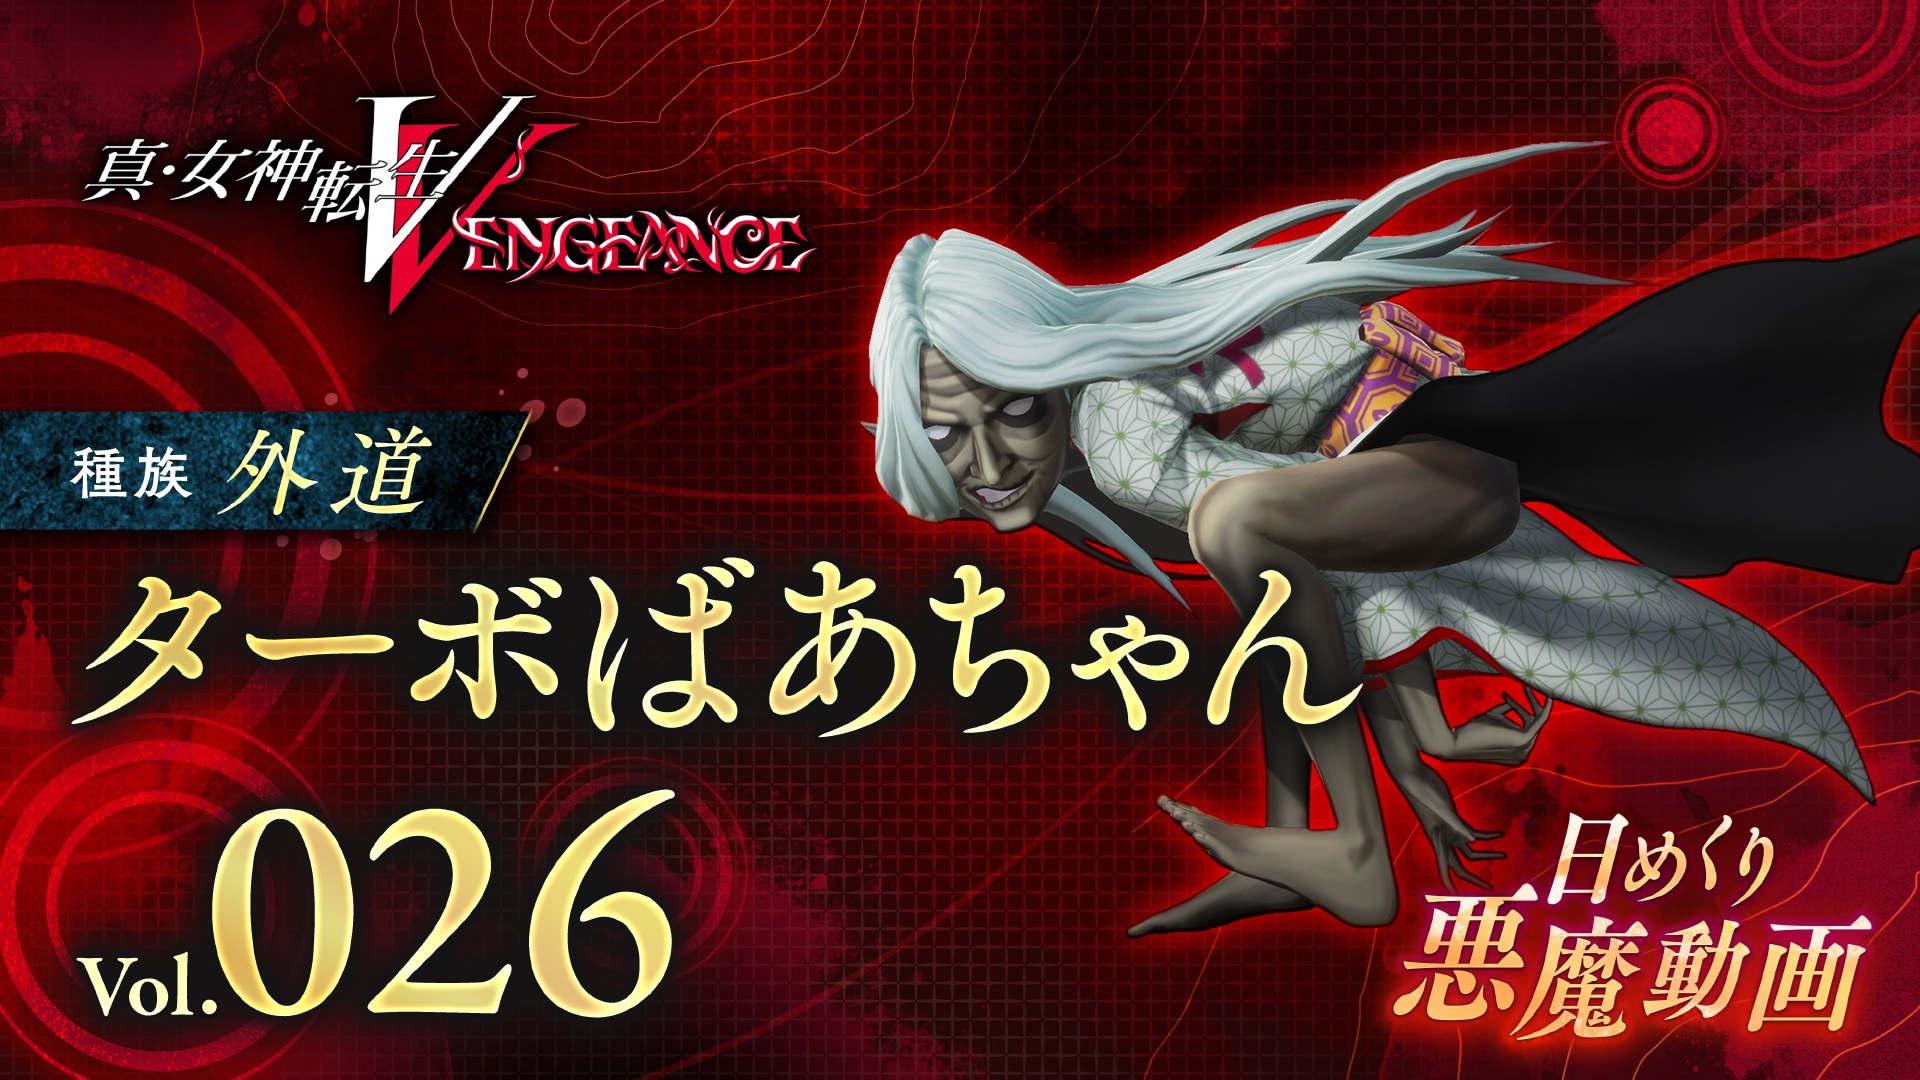 Shin Megami Tensei V: Vengeance Daily Demon Video Introduces Turbo Granny